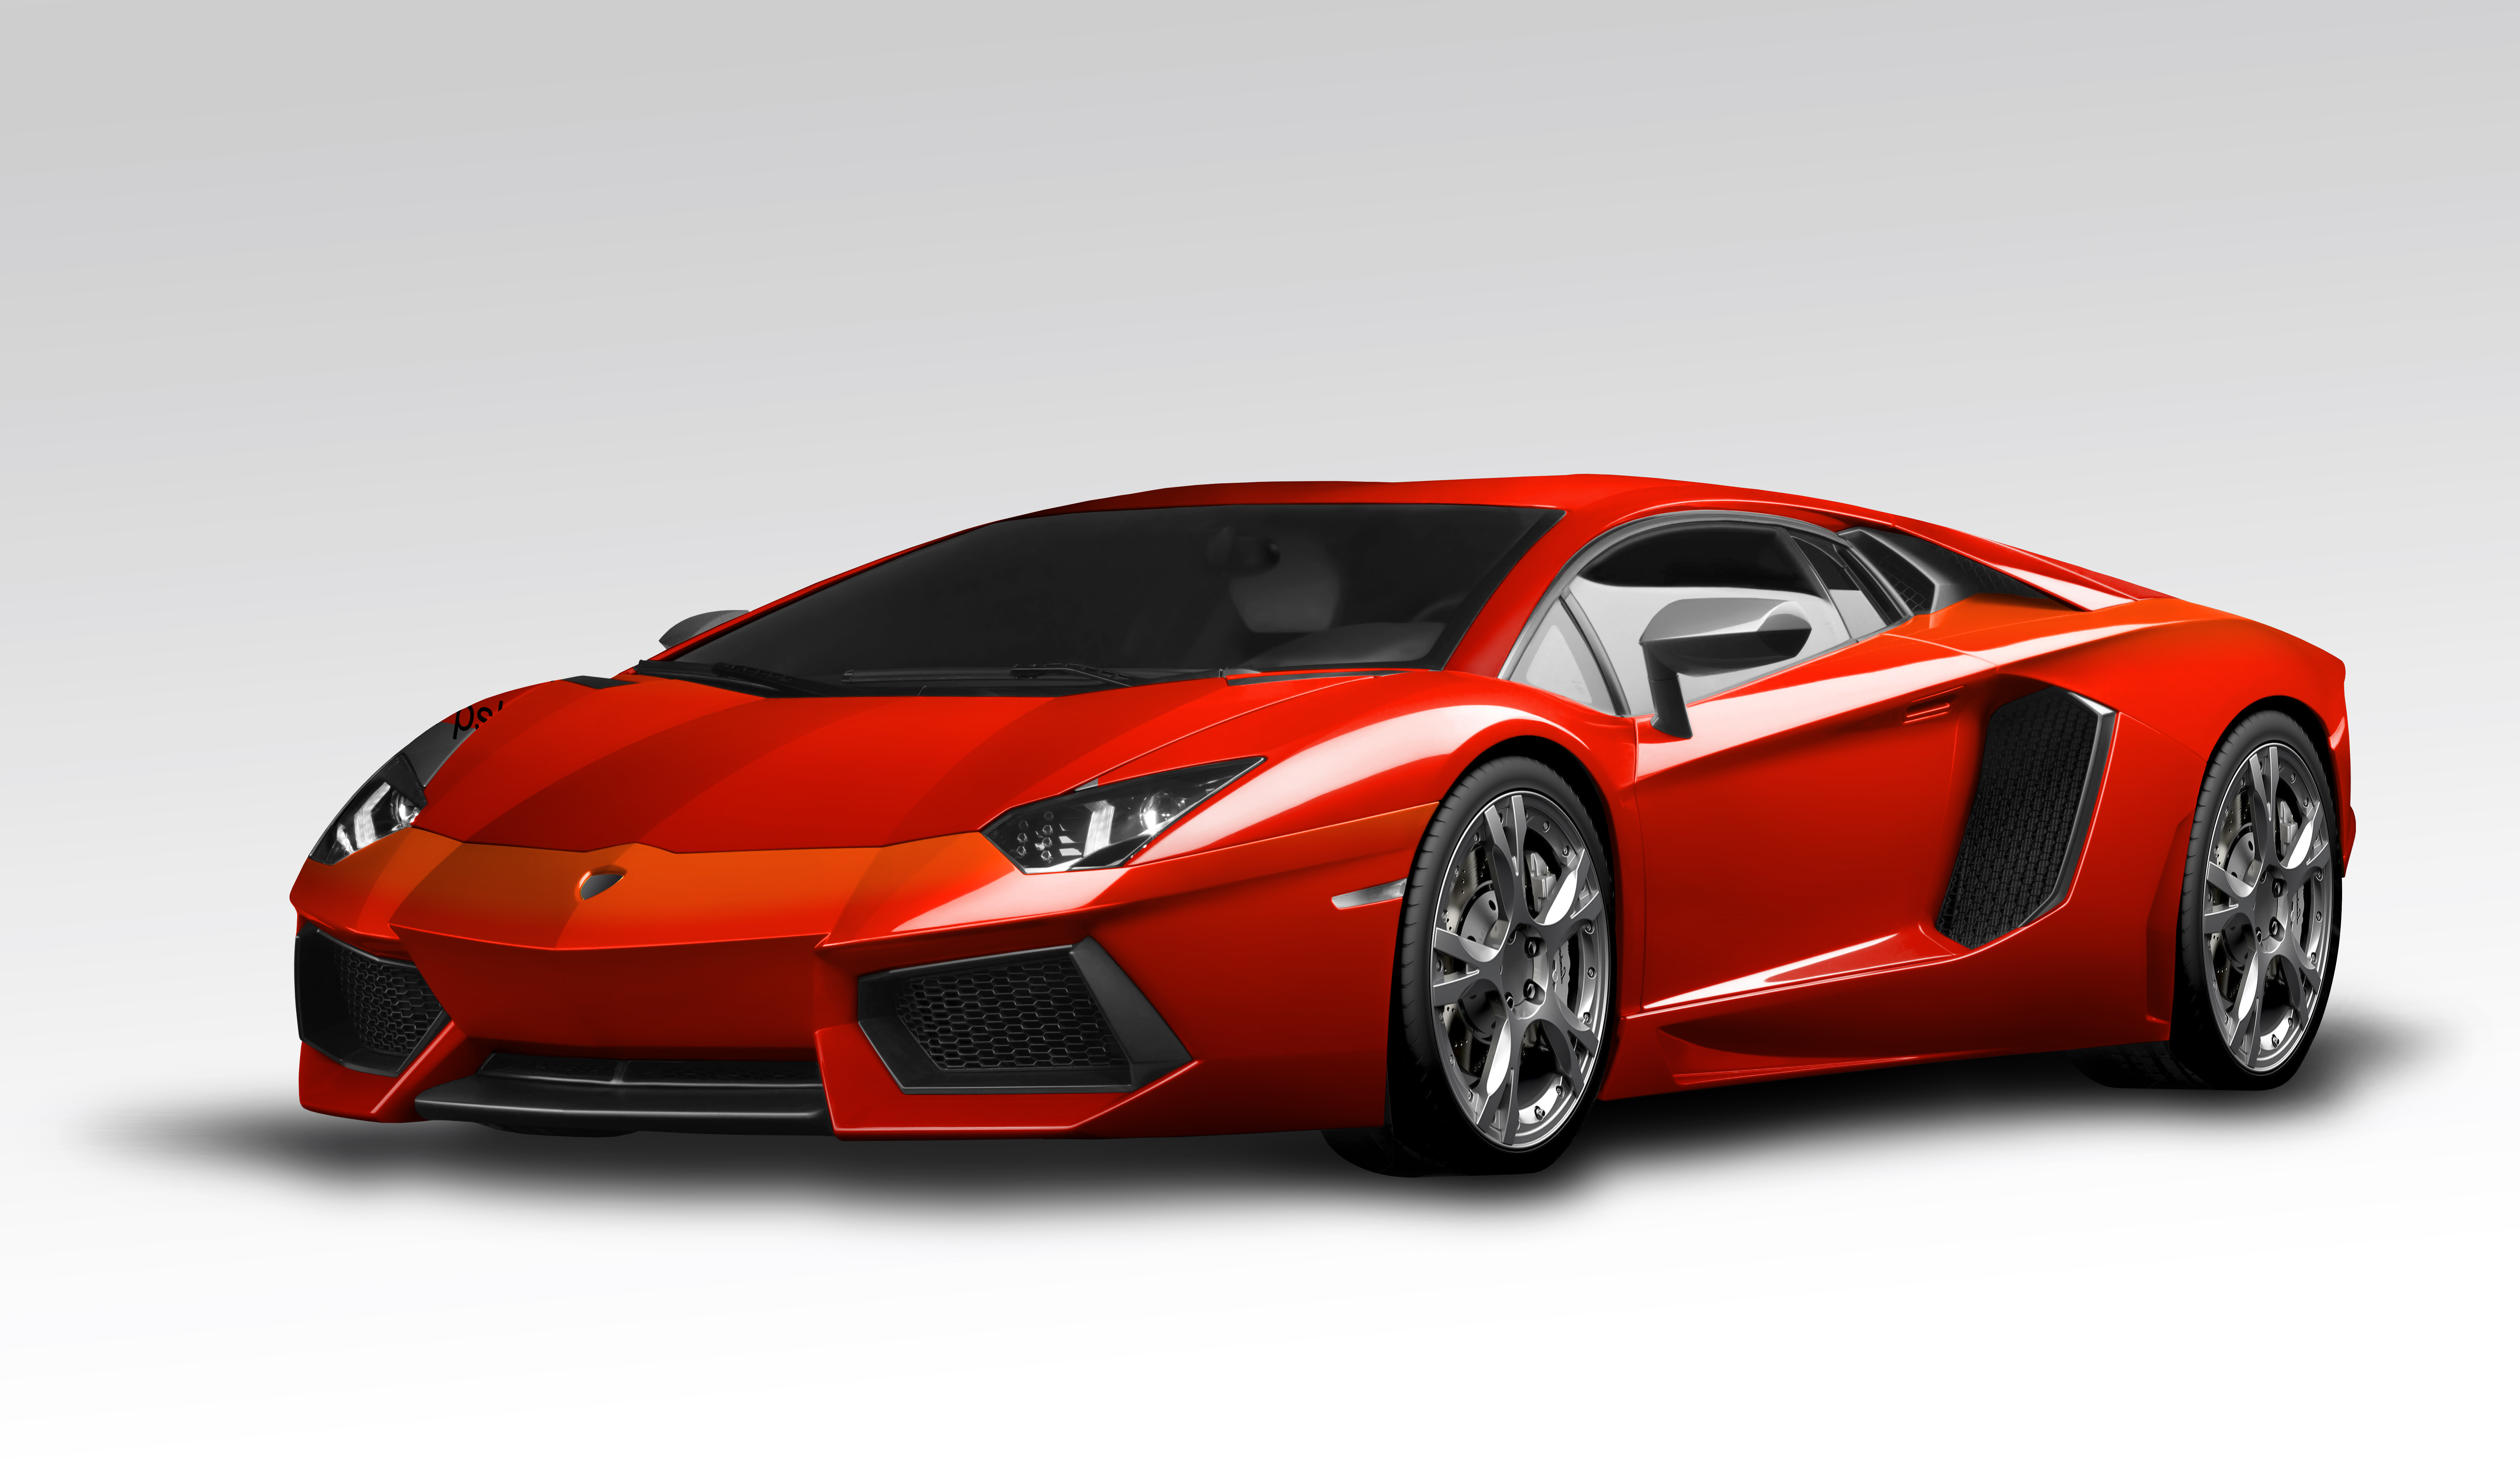 Free photo: Lamborghini Aventador Red - Aventador, Car ...